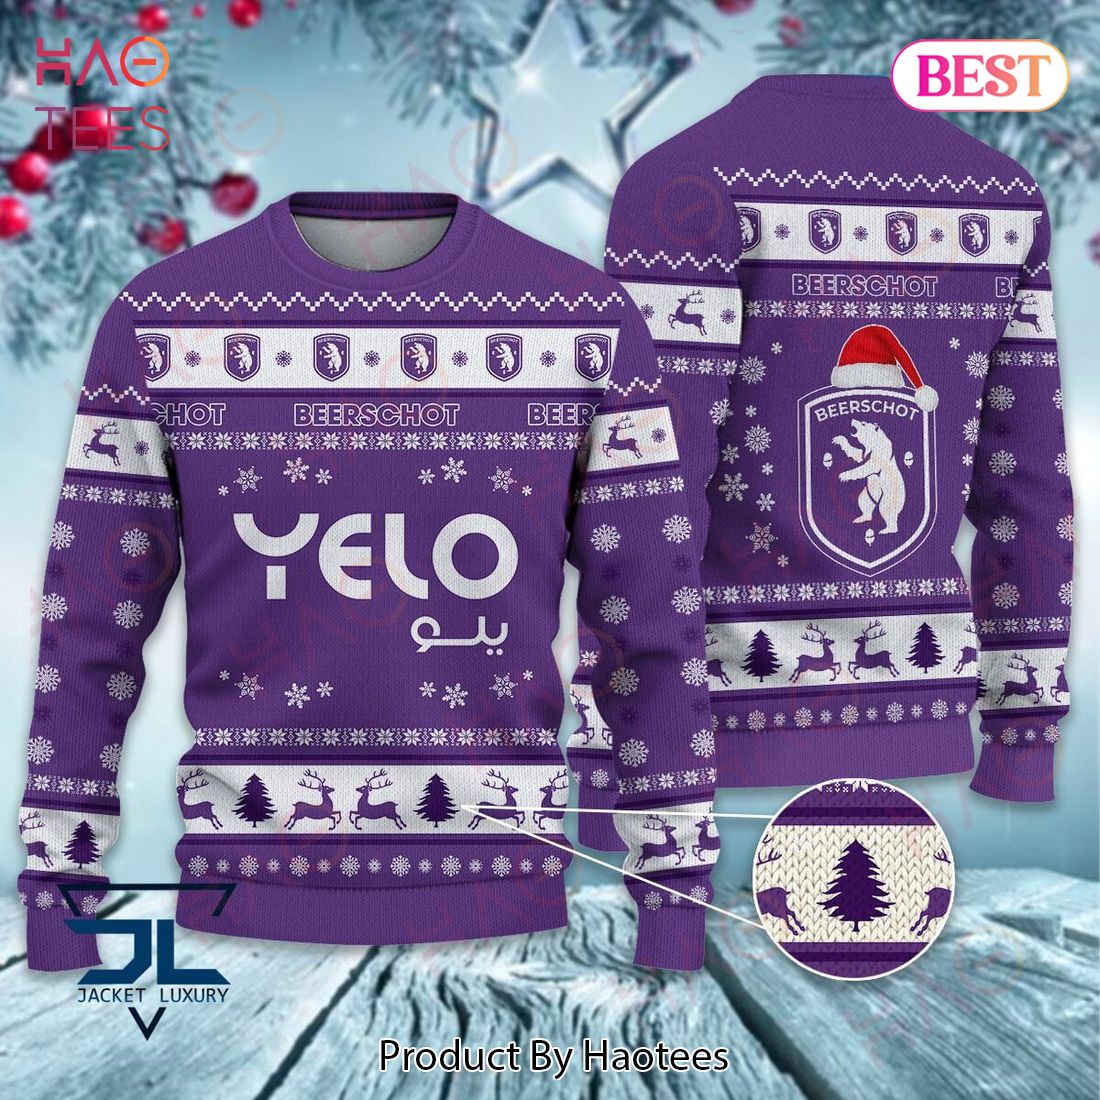 HOT Beerschot Yelo Christmas Luxury Brand Sweater Limited Edition